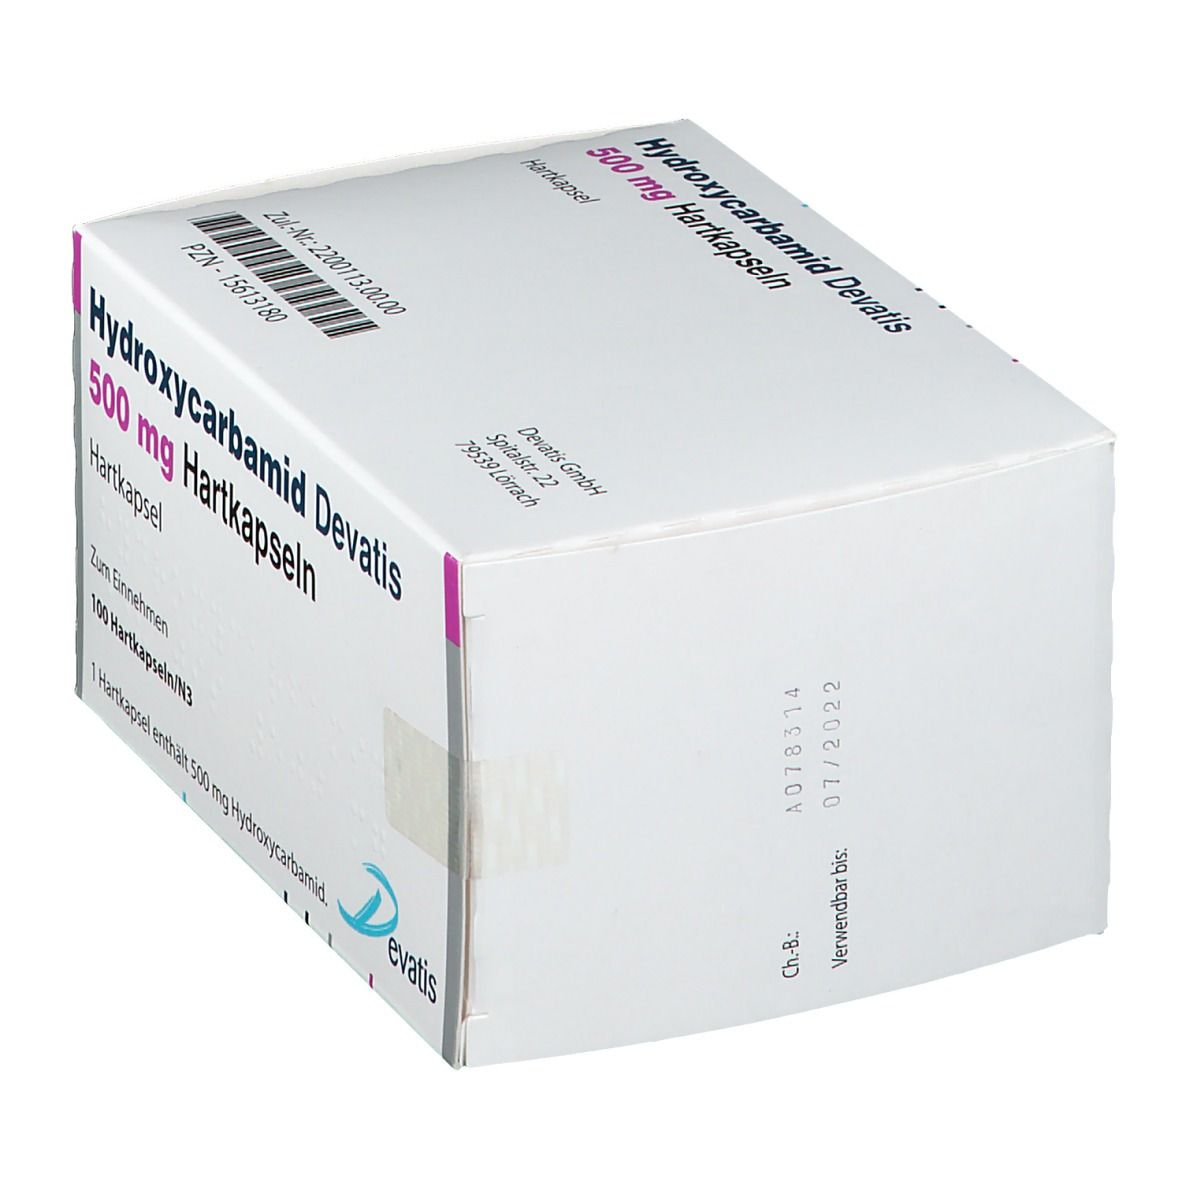 Hydroxycarbamid Devatis 500 mg